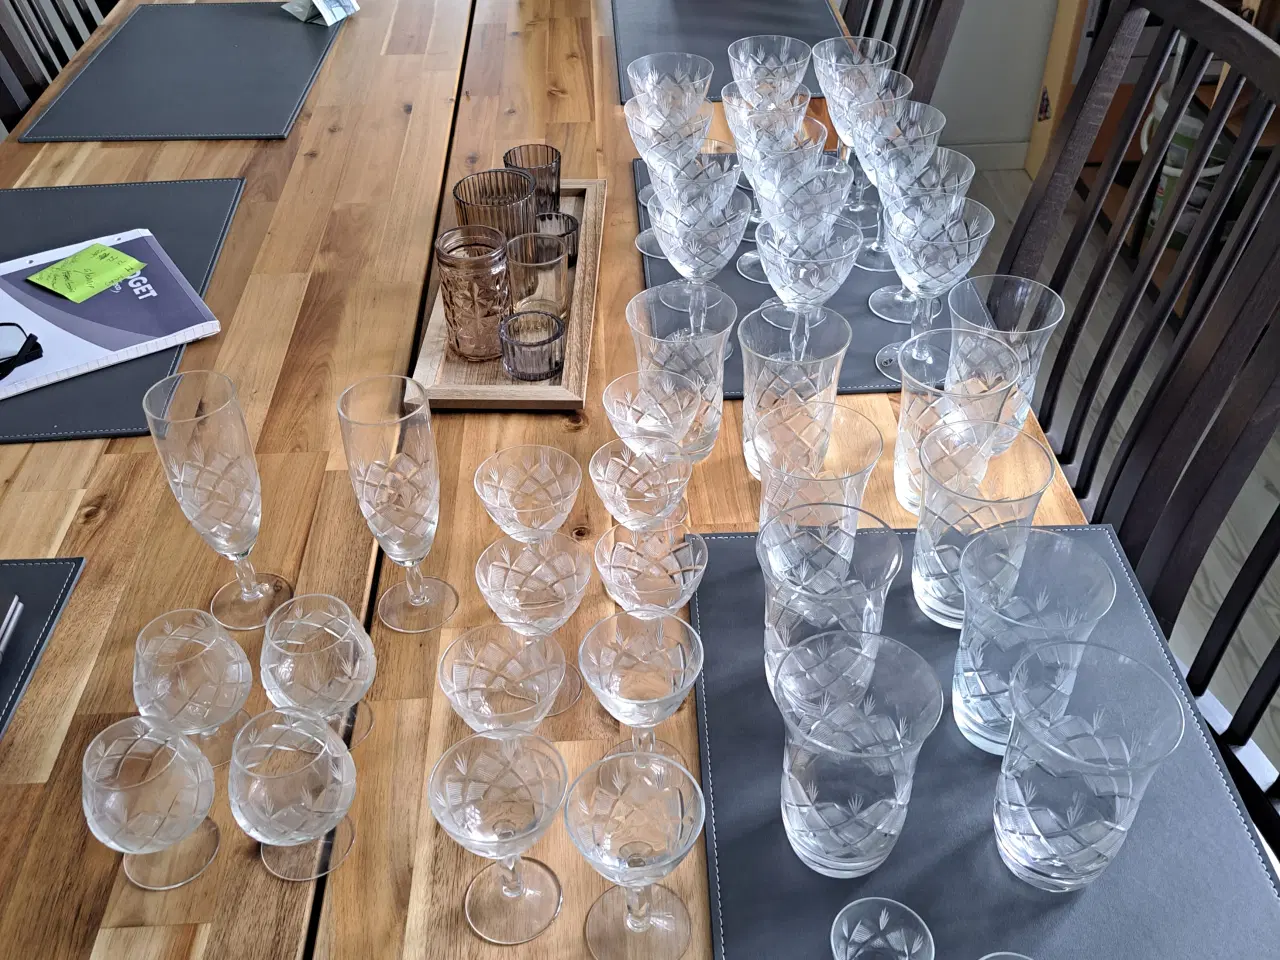 Billede 1 - Forskellige Lyngby glas.